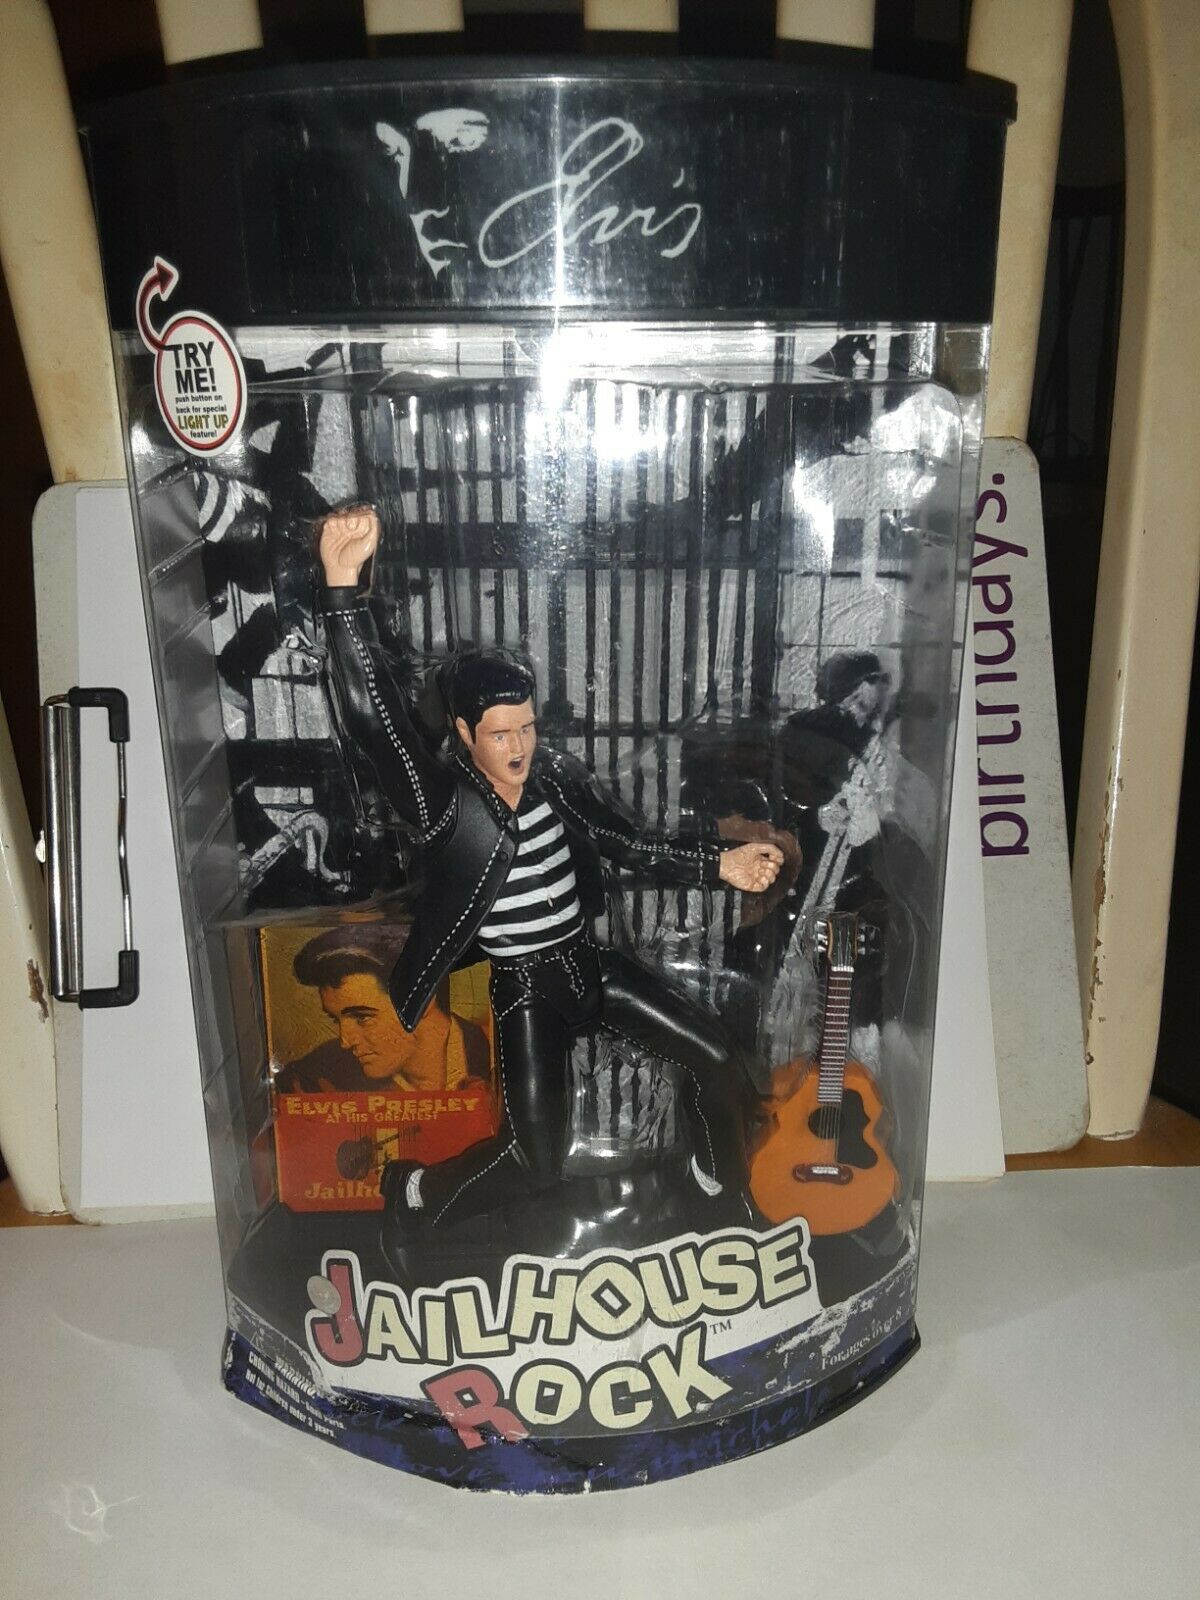 2000 jail house rock elvis Presley figure by x toys